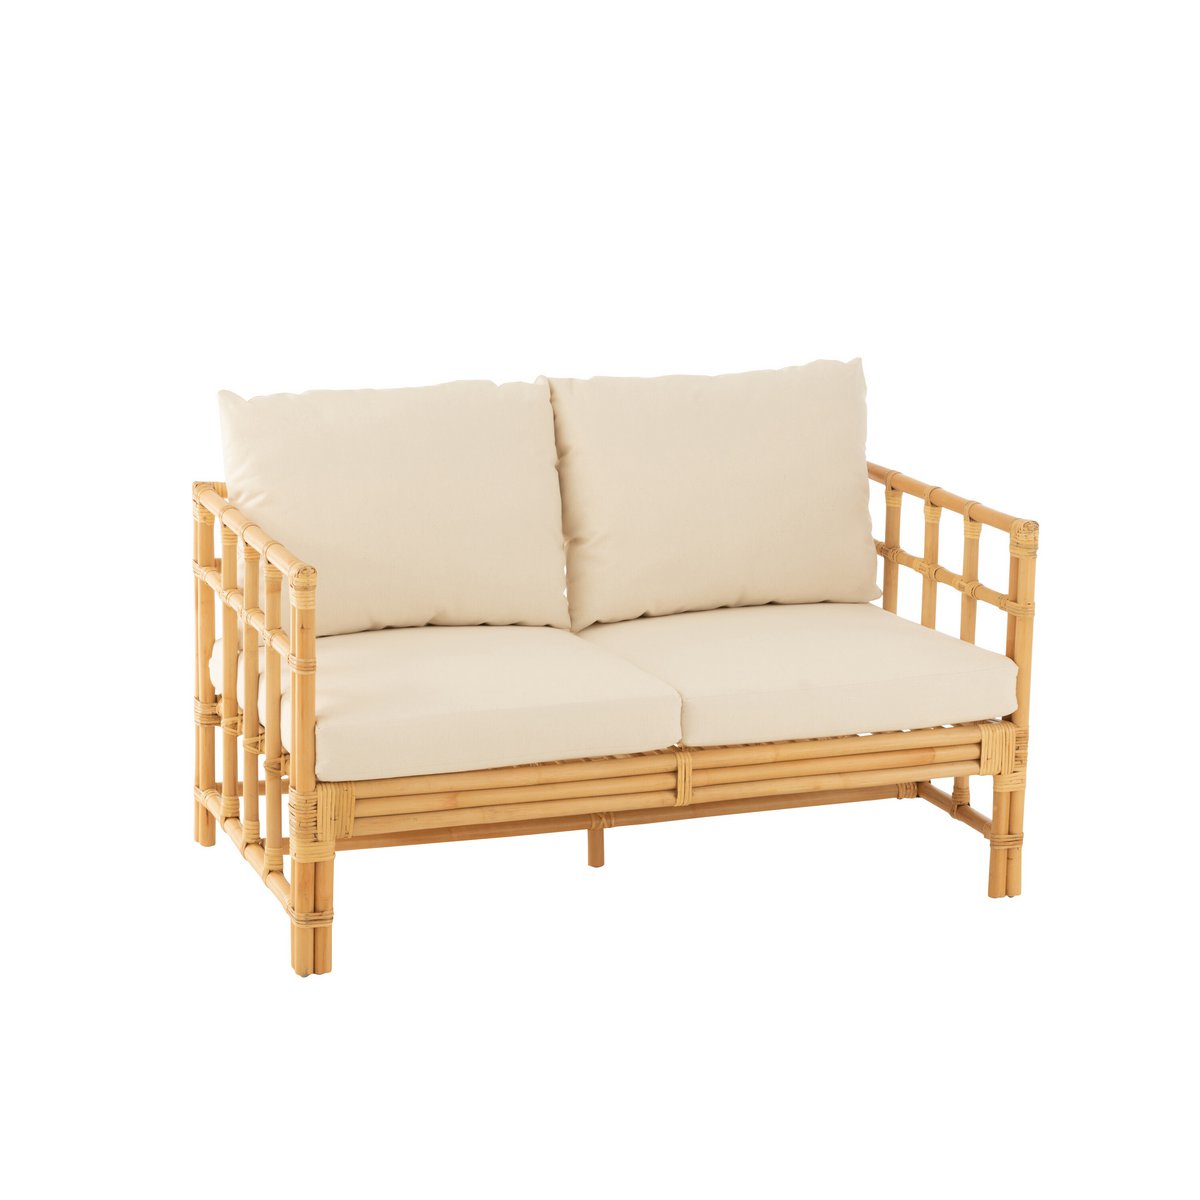 Elise sofa + cushion for 2 people Rattan/Natural/White fabric 